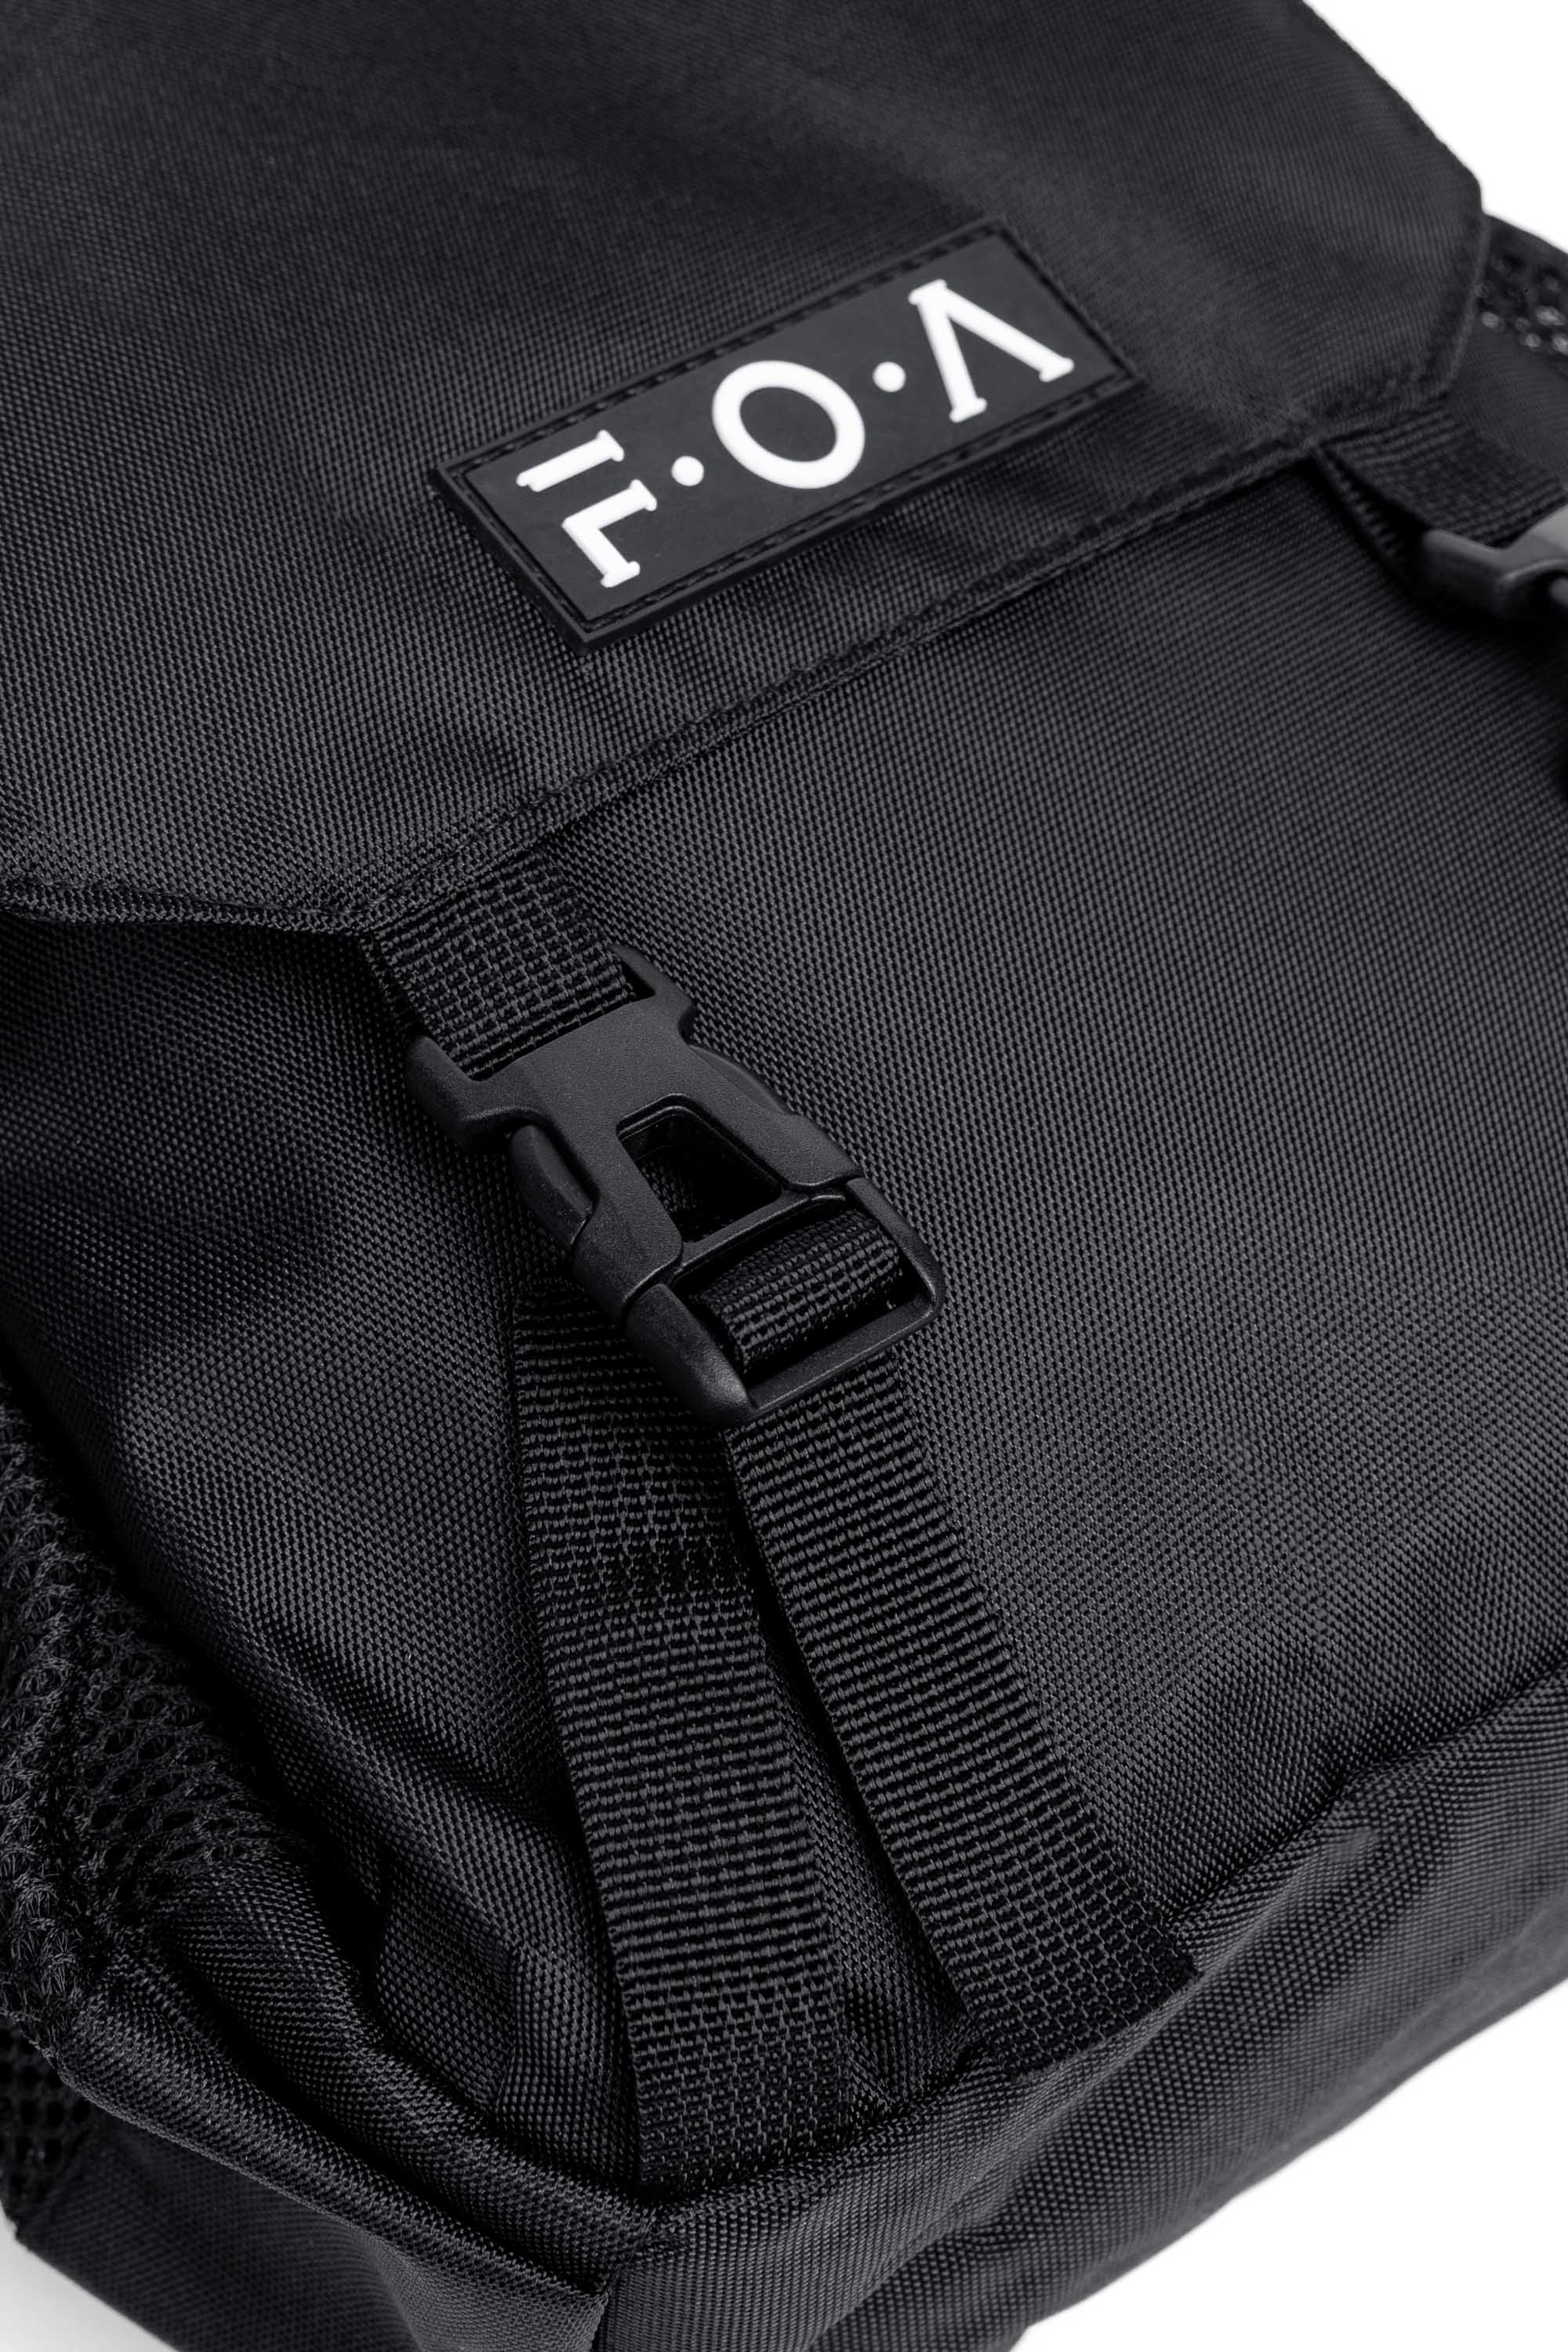 F.O.A Utility Bag